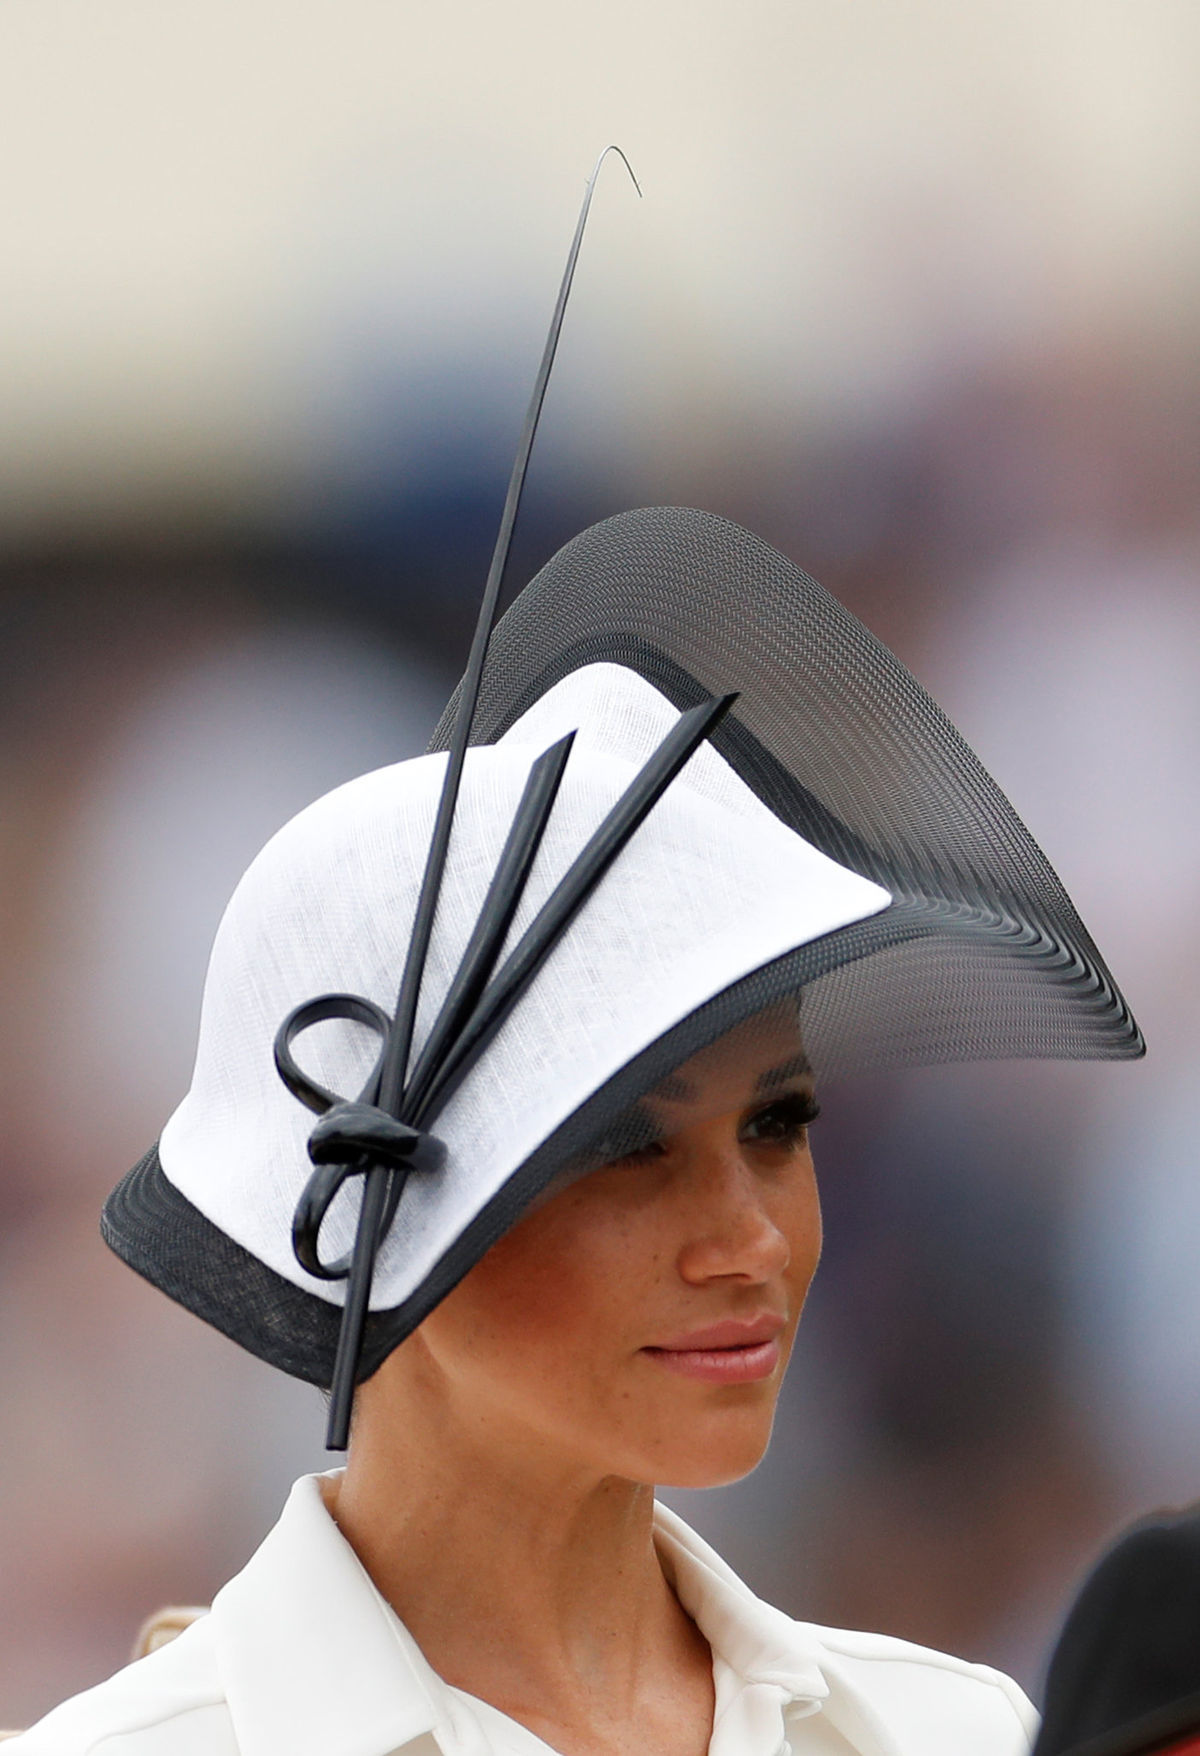 She this hat. Шляпки Филиппа Трейси. Меган Маркл в шляпе. Филип Трейси шляпки королевской семьи.